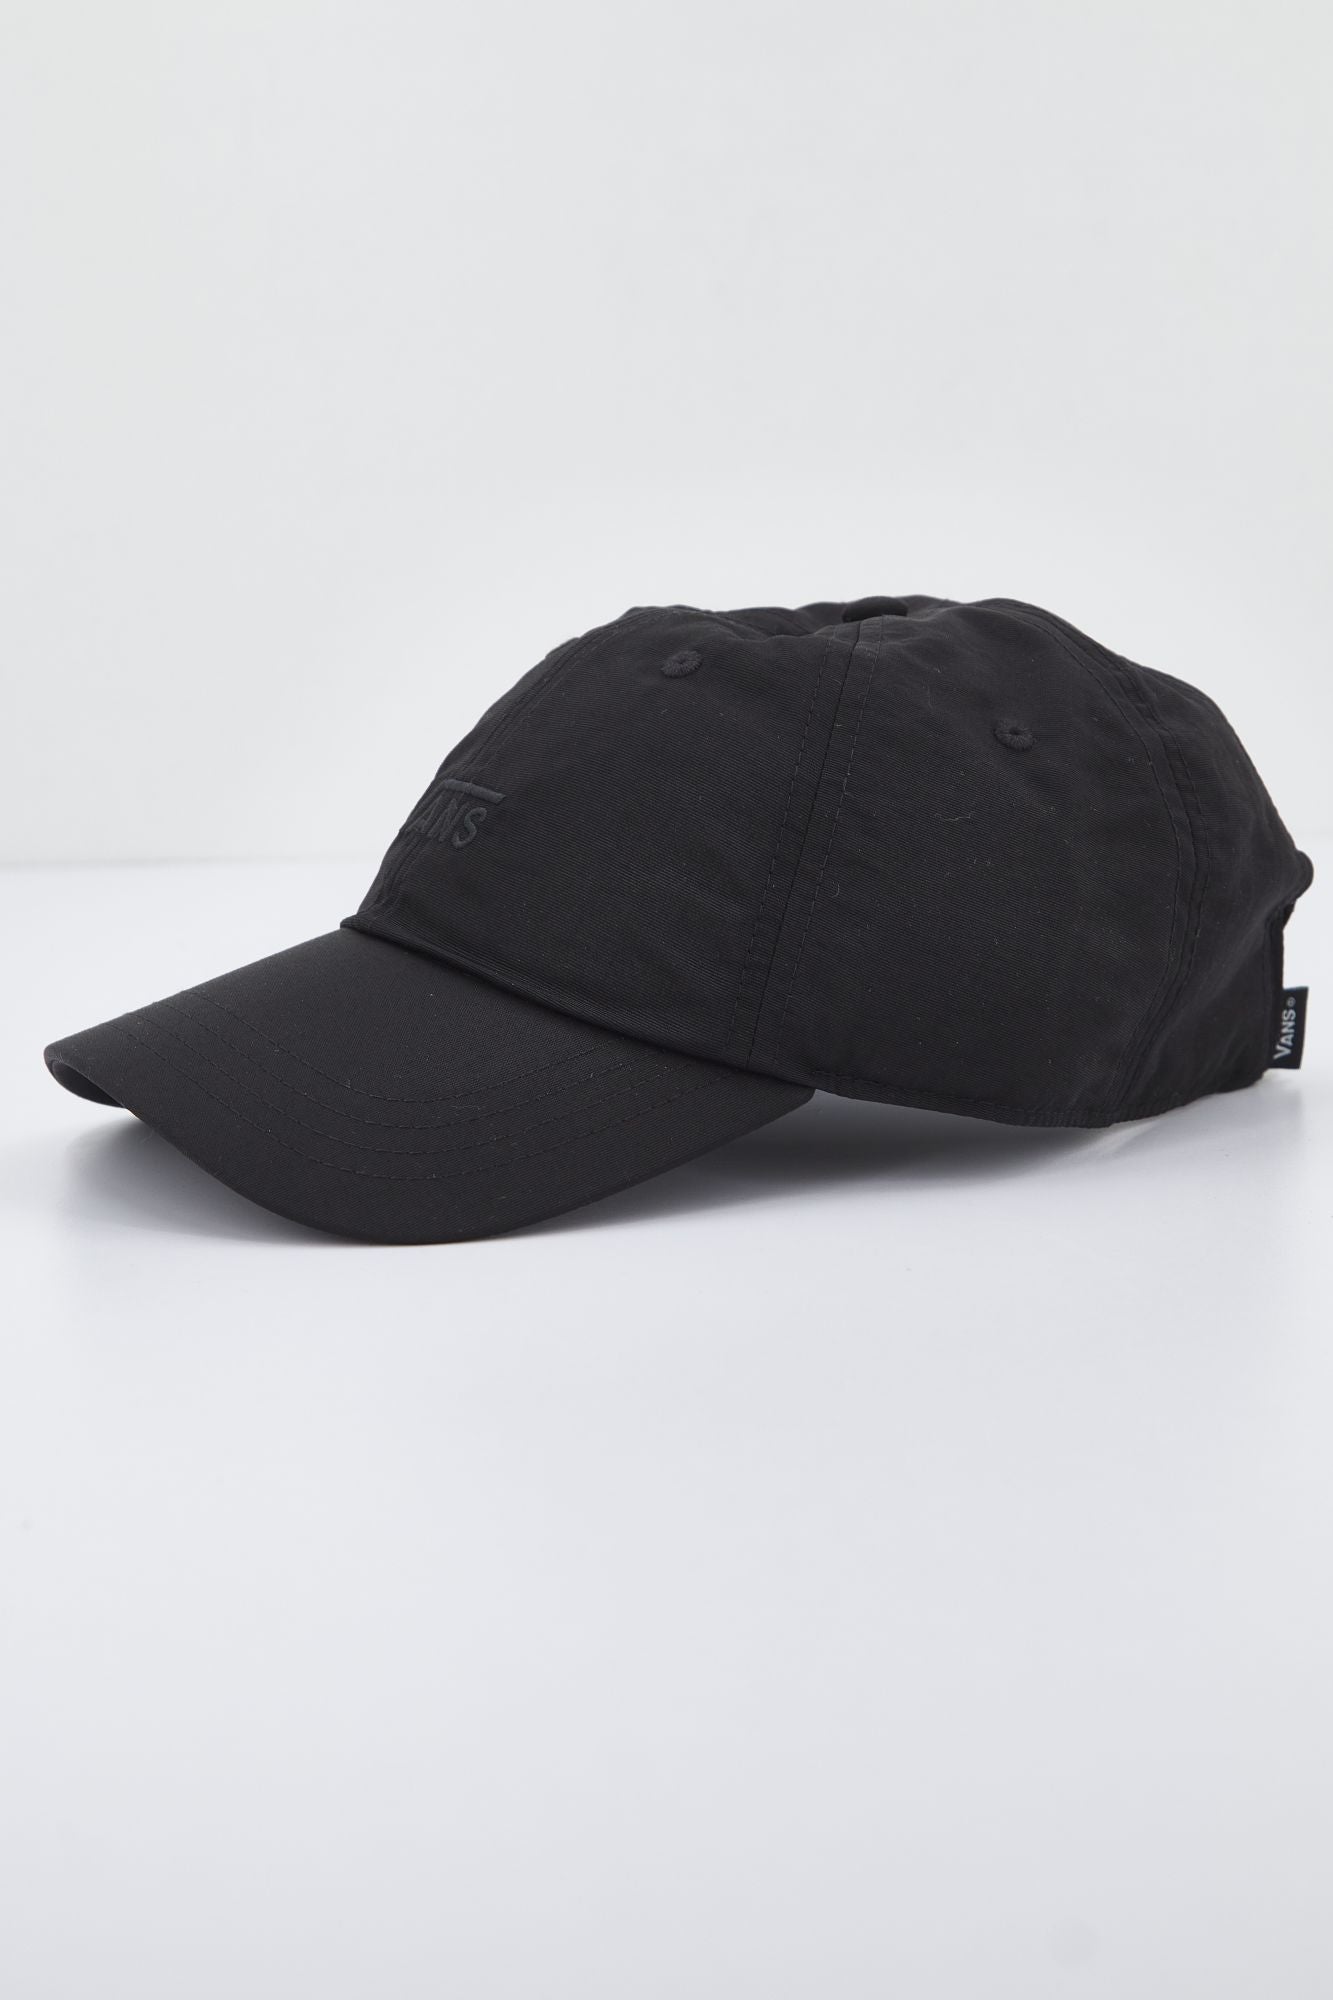 VANS HIGH BACK CAP en color NEGRO (2)